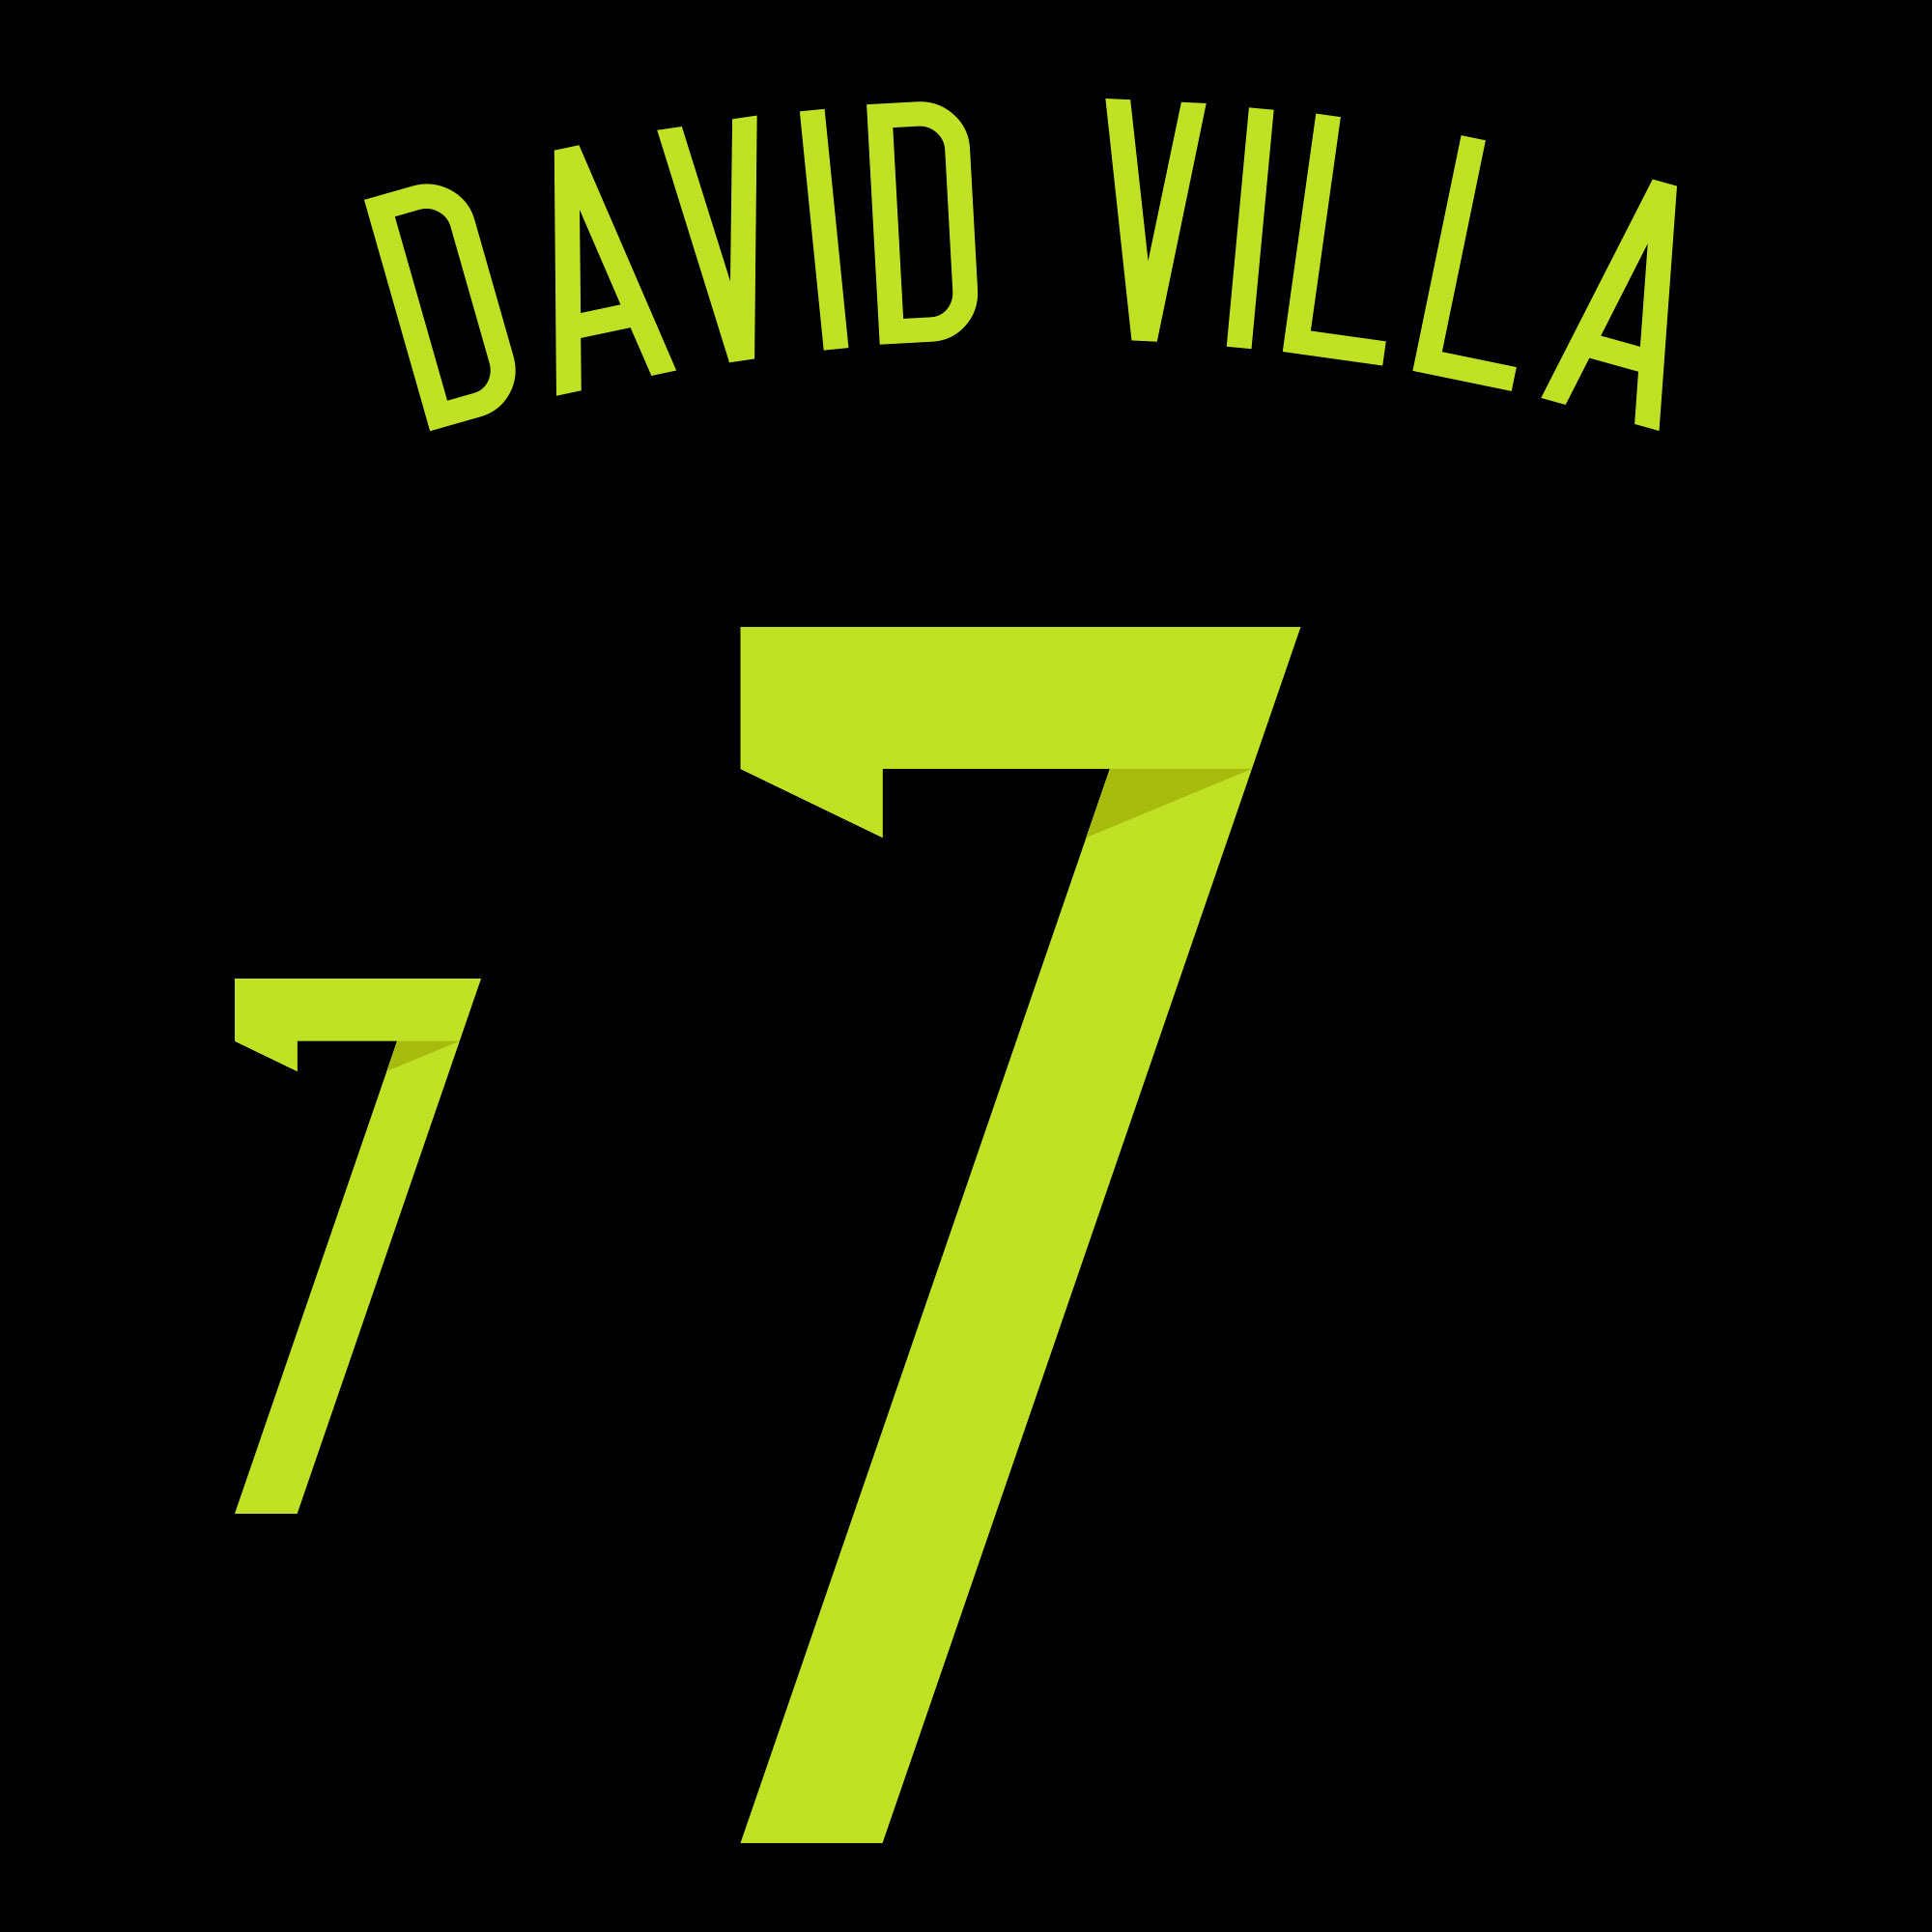 David Villa 7